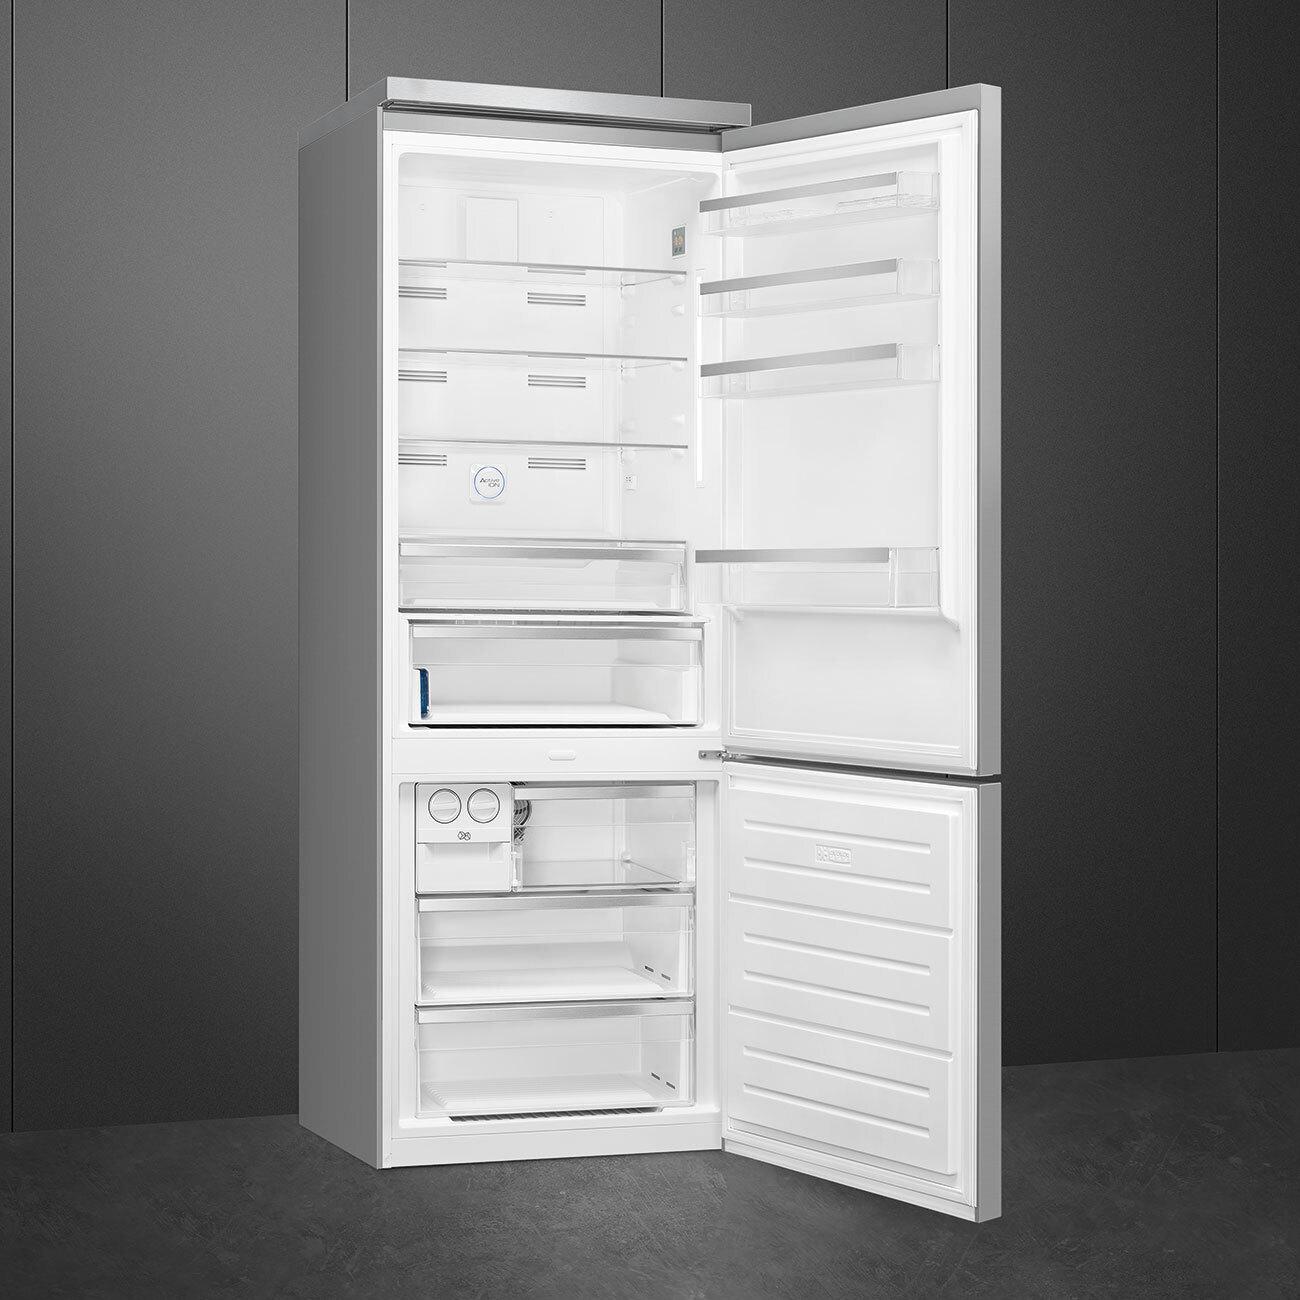 Smeg FA490URX Refrigerator Stainless Steel Fa490Urx